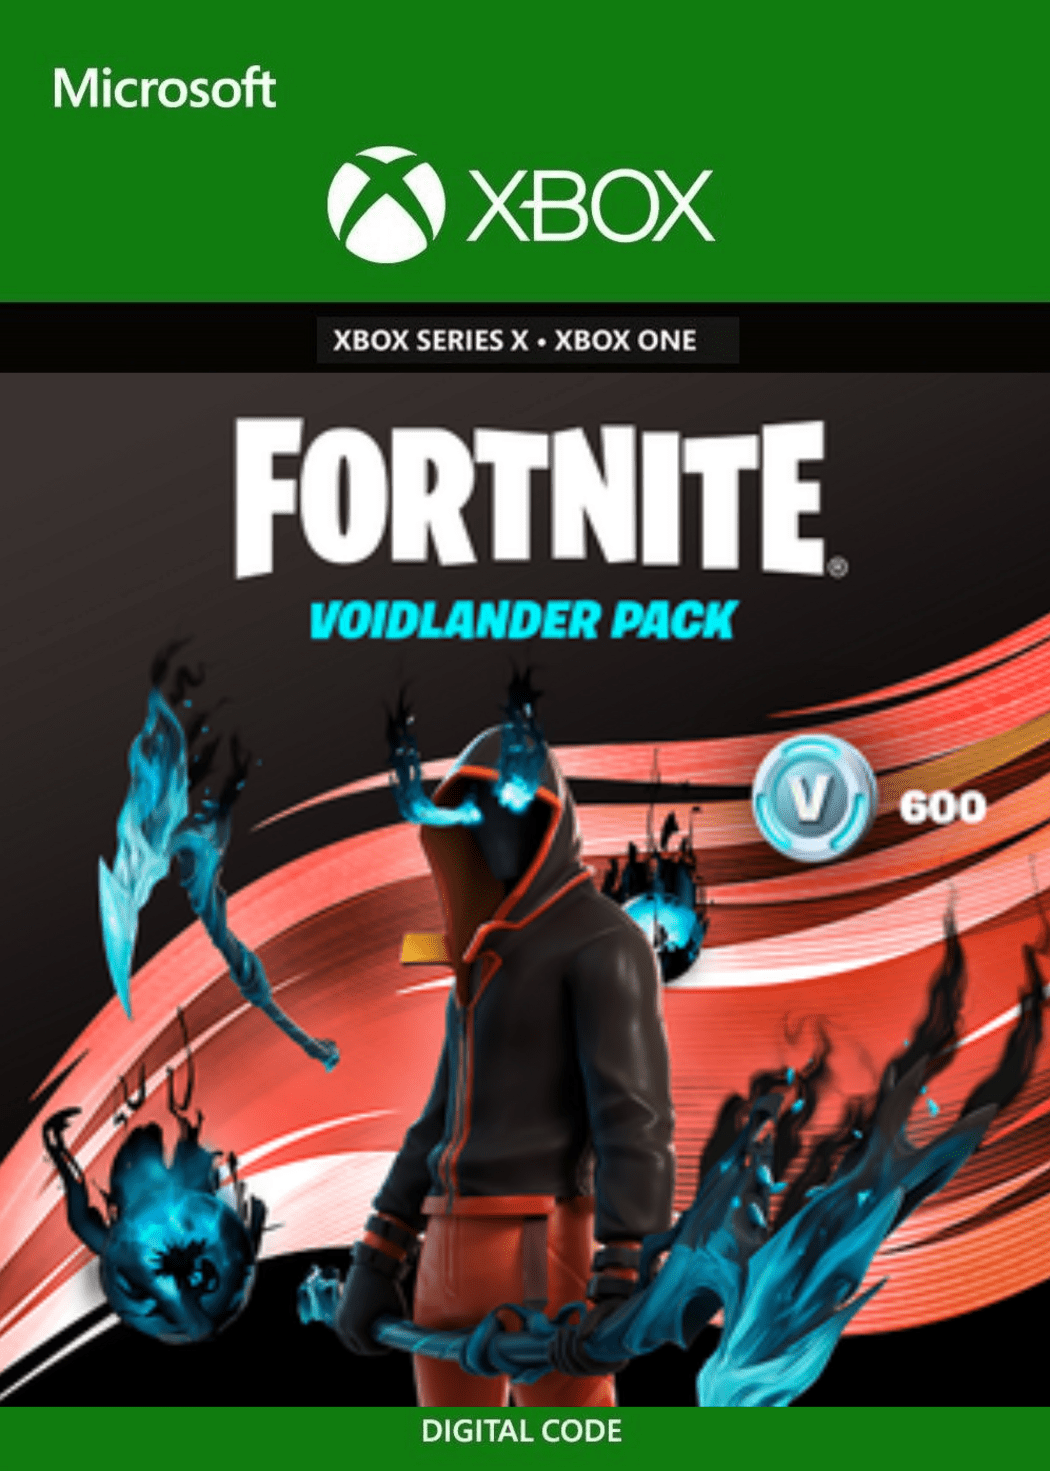 [INSTANT] Fortnite Code - Voidlander Pack + 600 V-Bucks - Xbox Live - USA  Key